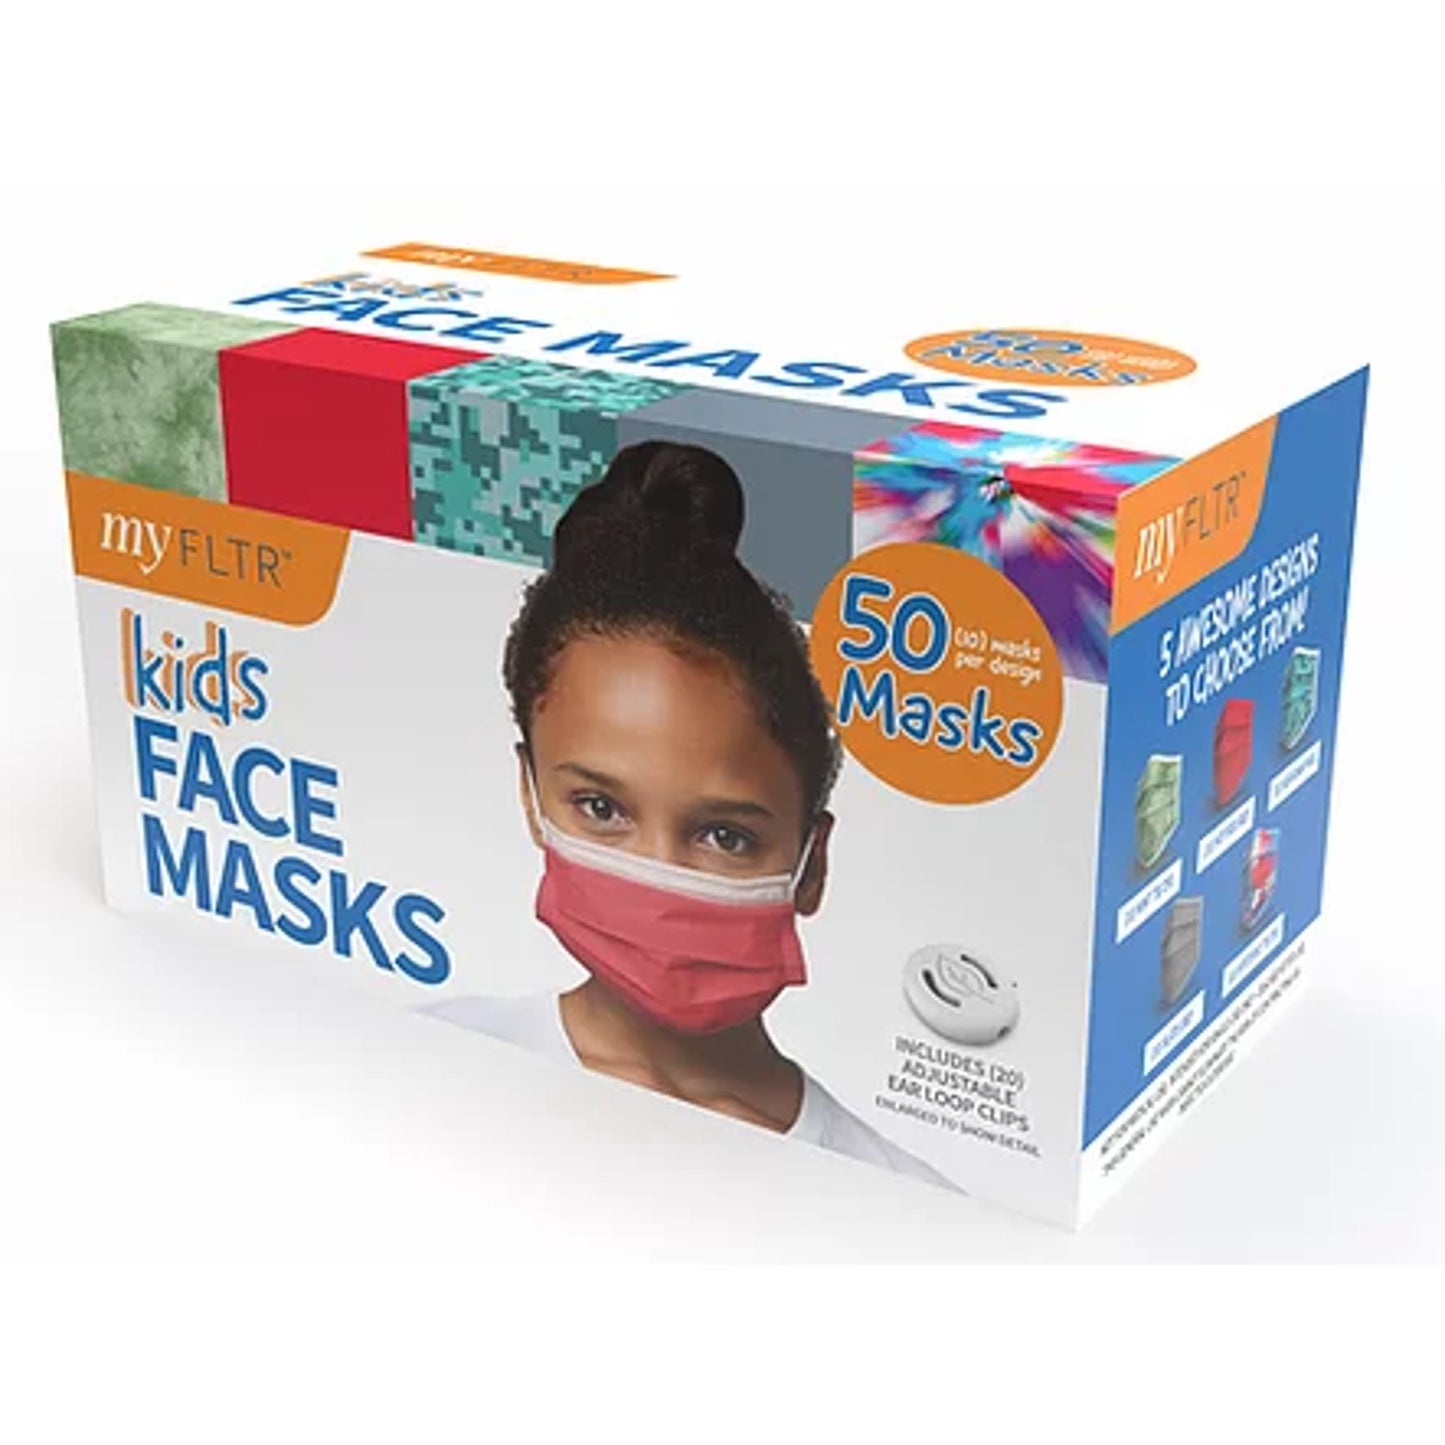 FLTR Face Mask Sized for Kids 3-layer 5 Designs 1 Case - 50 Pack 95% Filtration